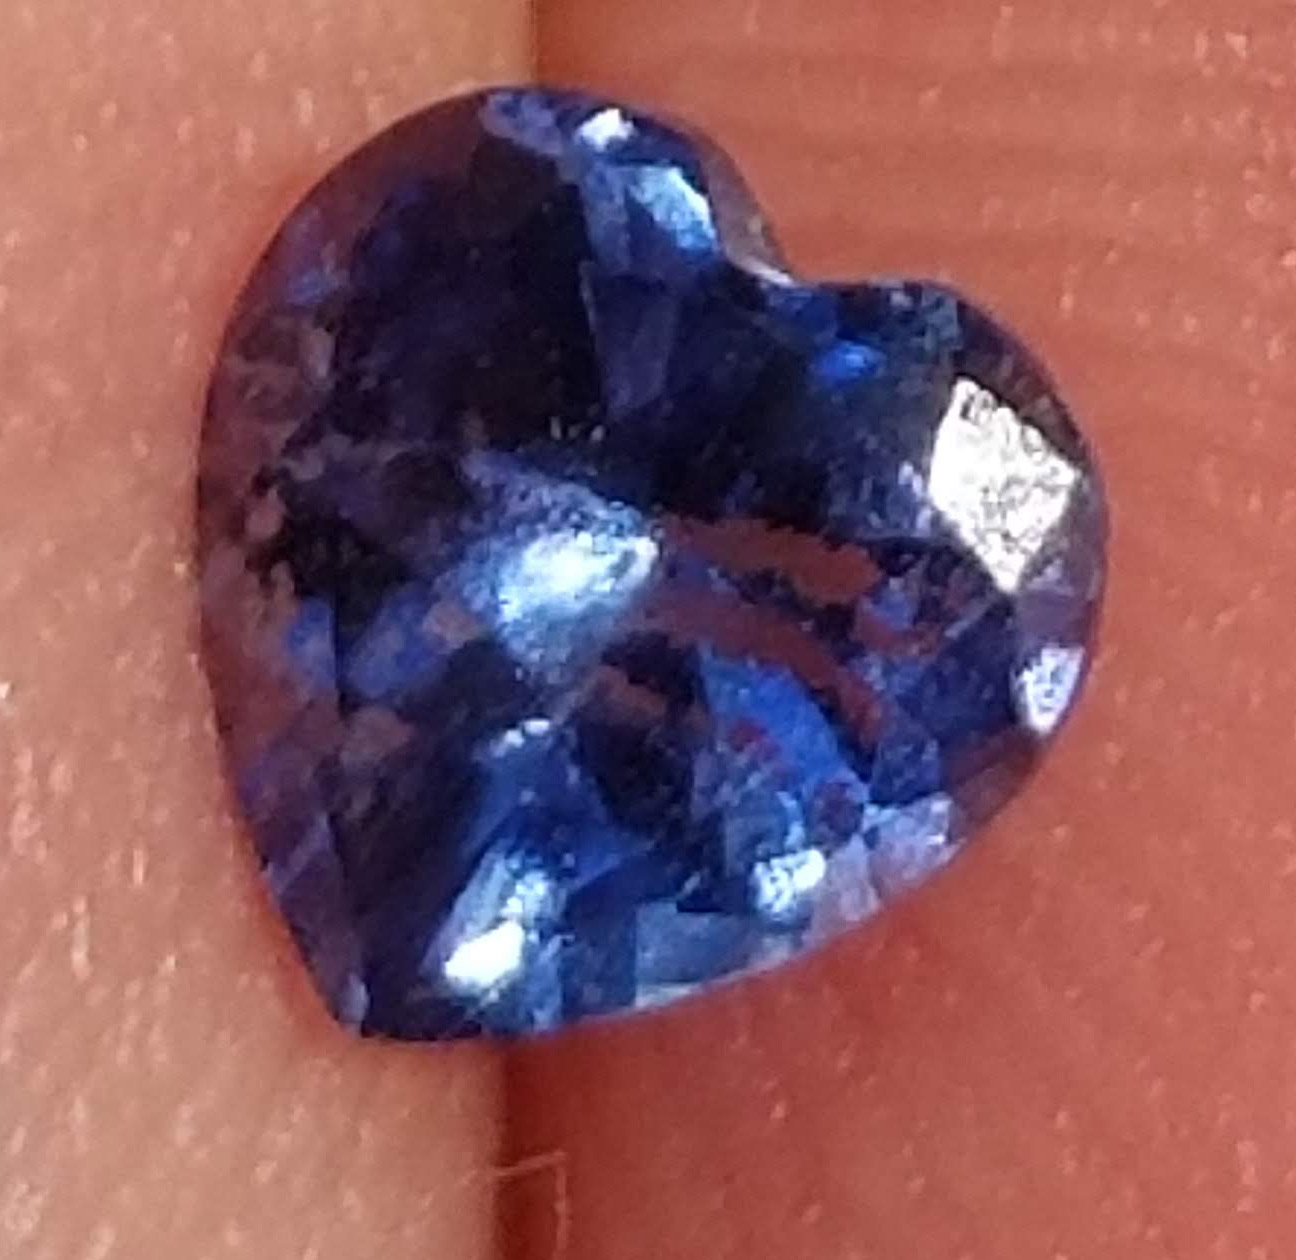 Heart Cut Royal Blue Sri Lanka Sapphire 0.60 Carats